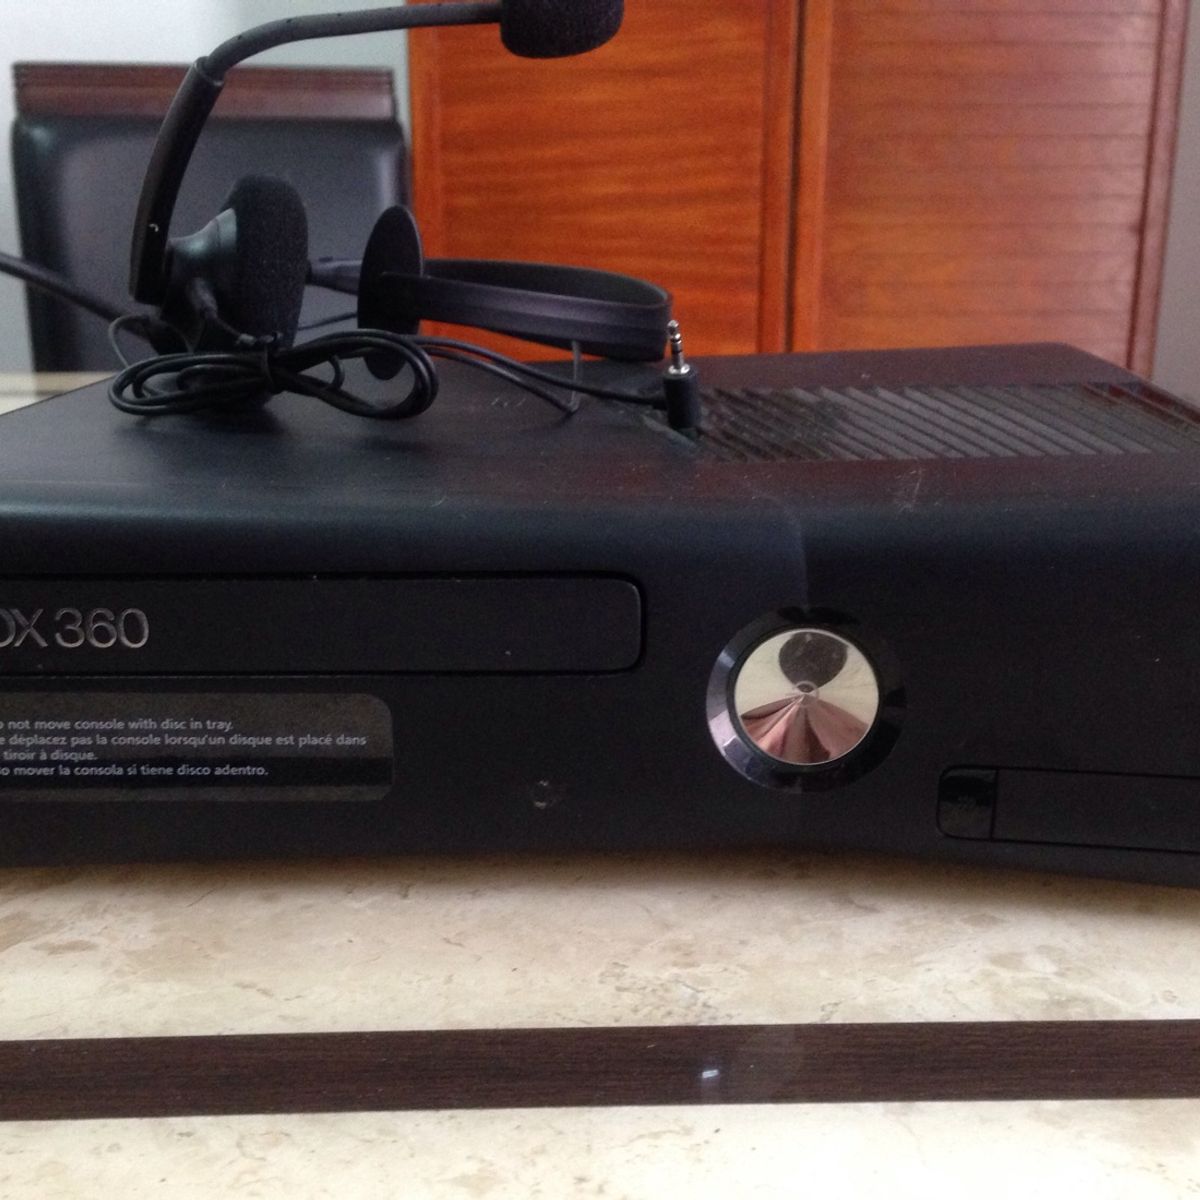 Xbox 360 Super Slim | Console de Videogame Xbox Usado 70412943 | enjoei